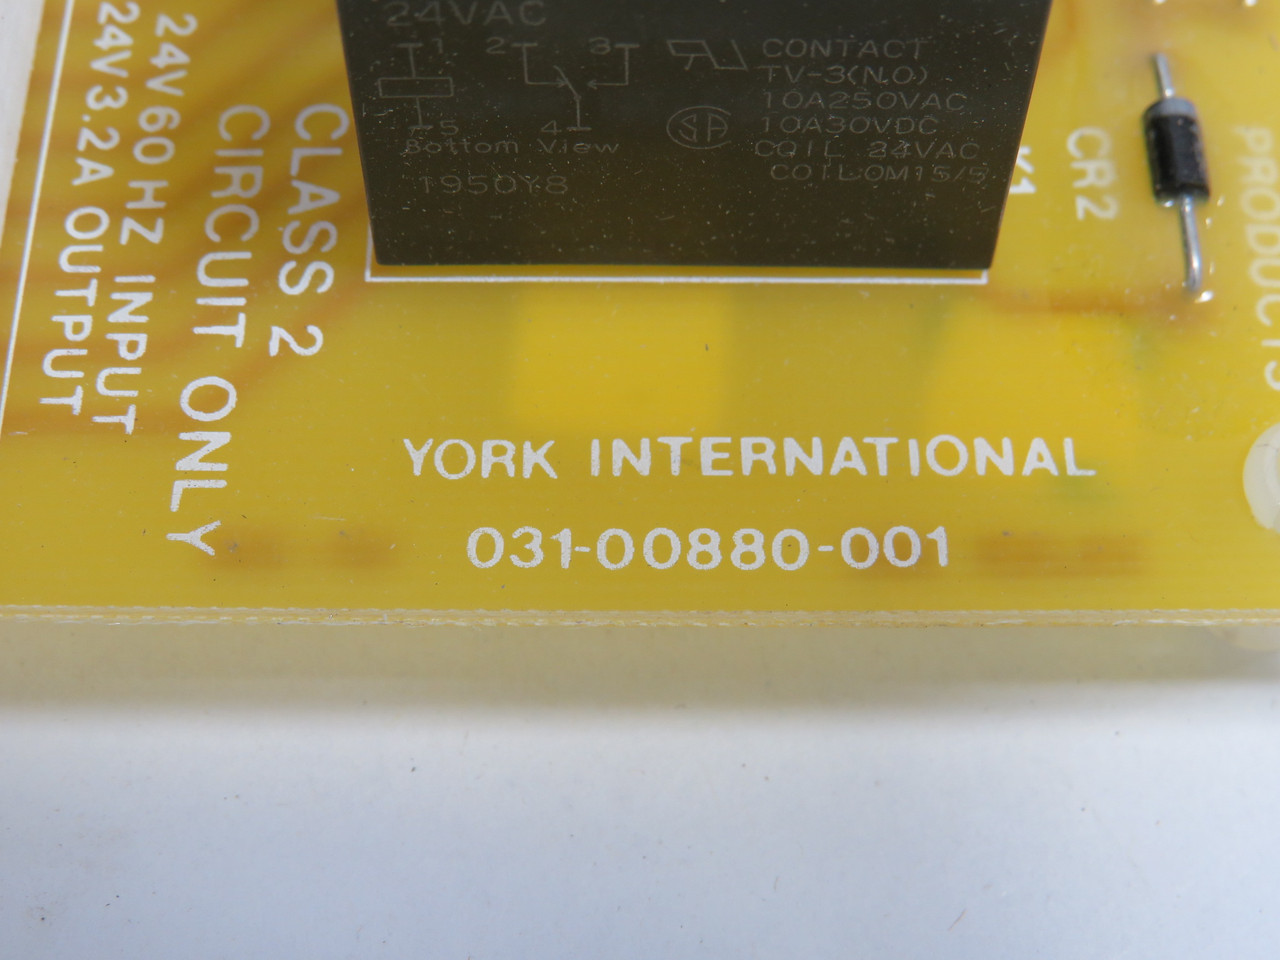 York 031-00880-001 Ignitor Control Board Source 1 S1-0310880001 ! NEW !